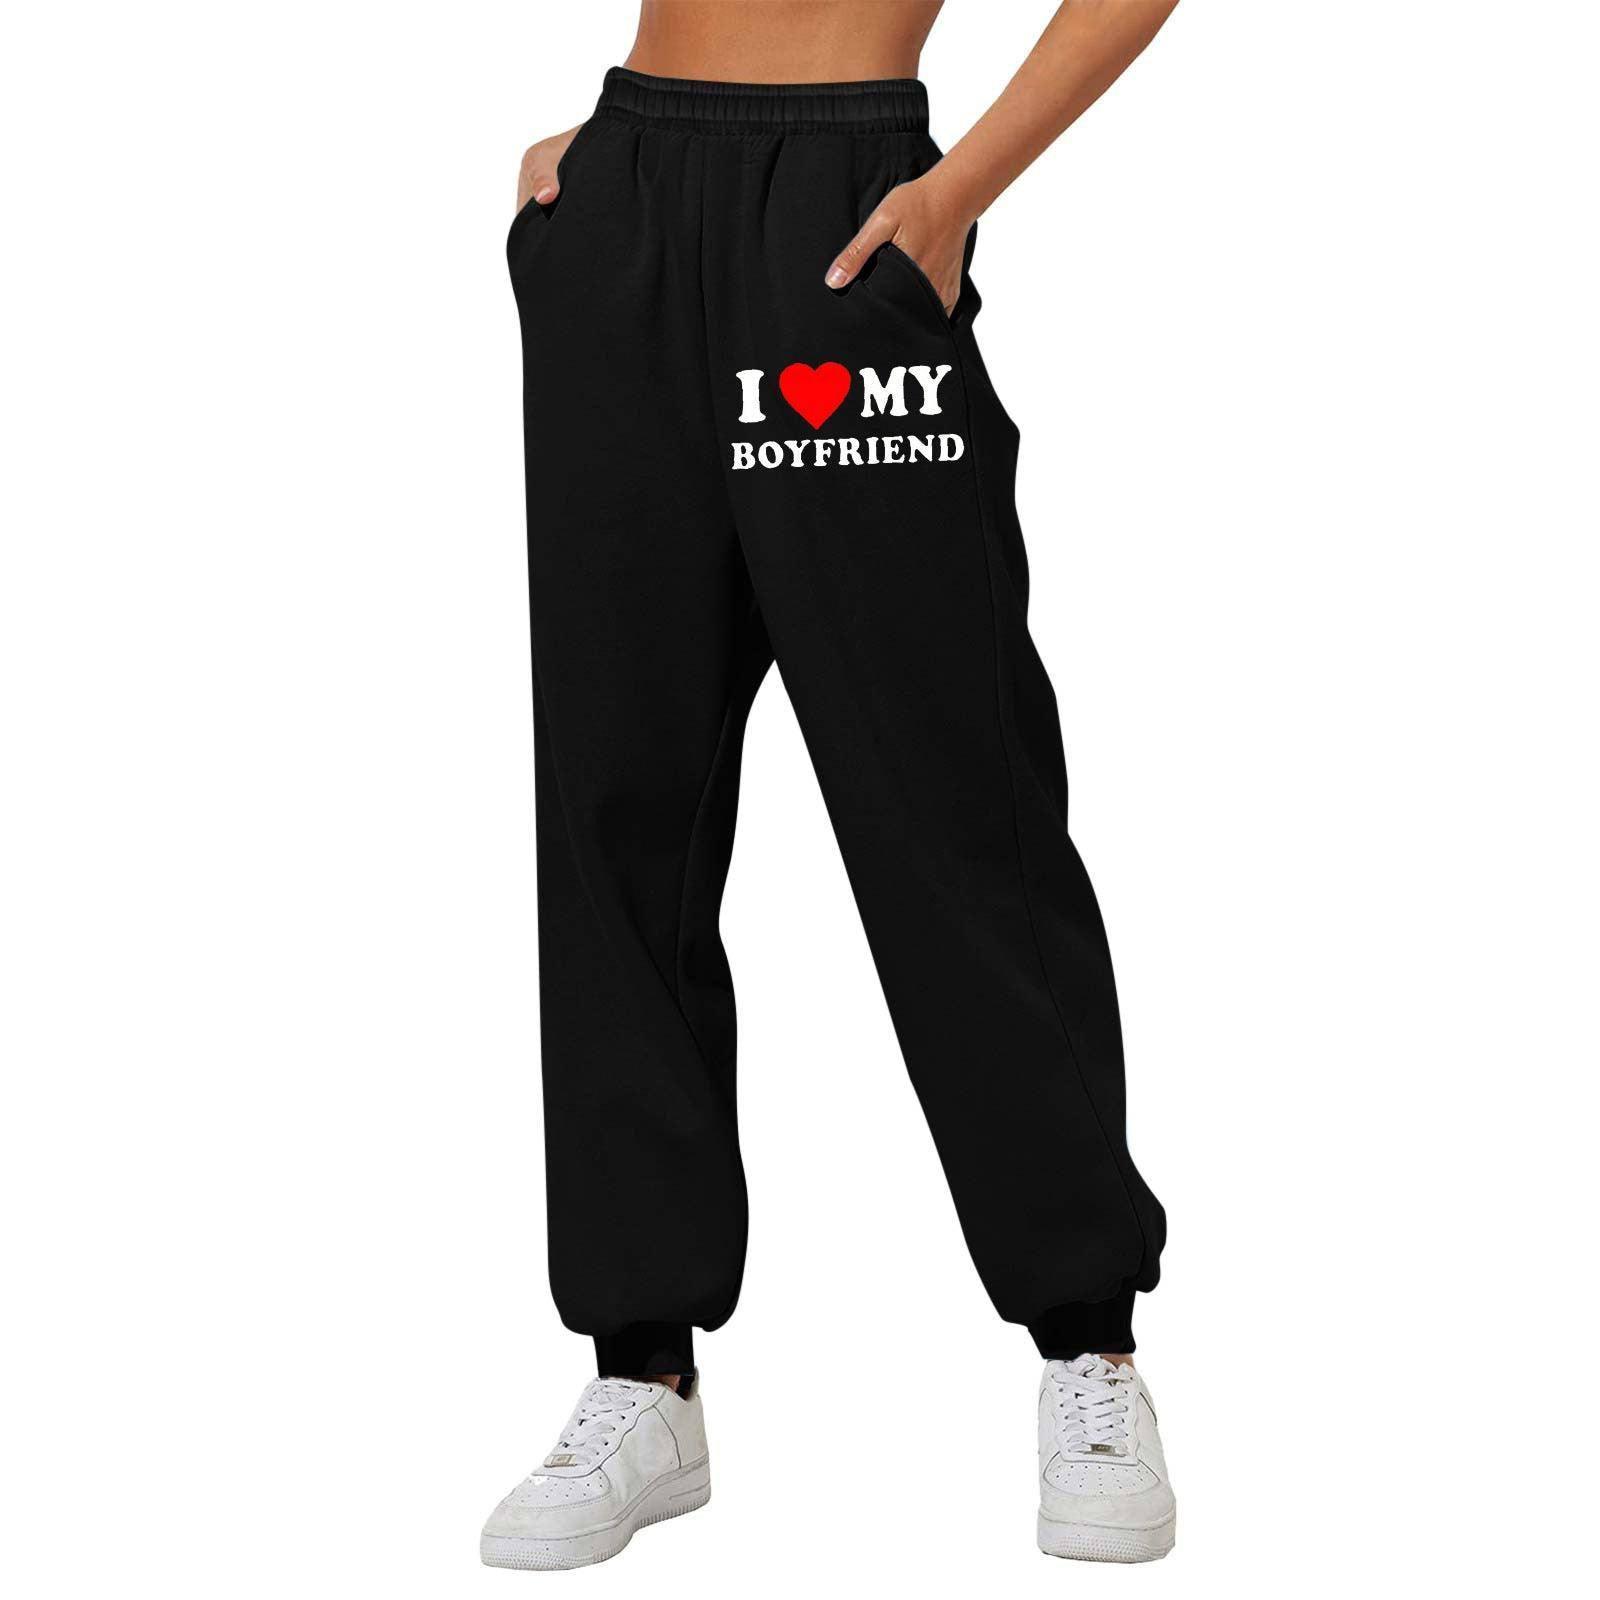 I Love MY BOYFRIEND Printed Trousers Casual Sweatpants Men-Black front print-6